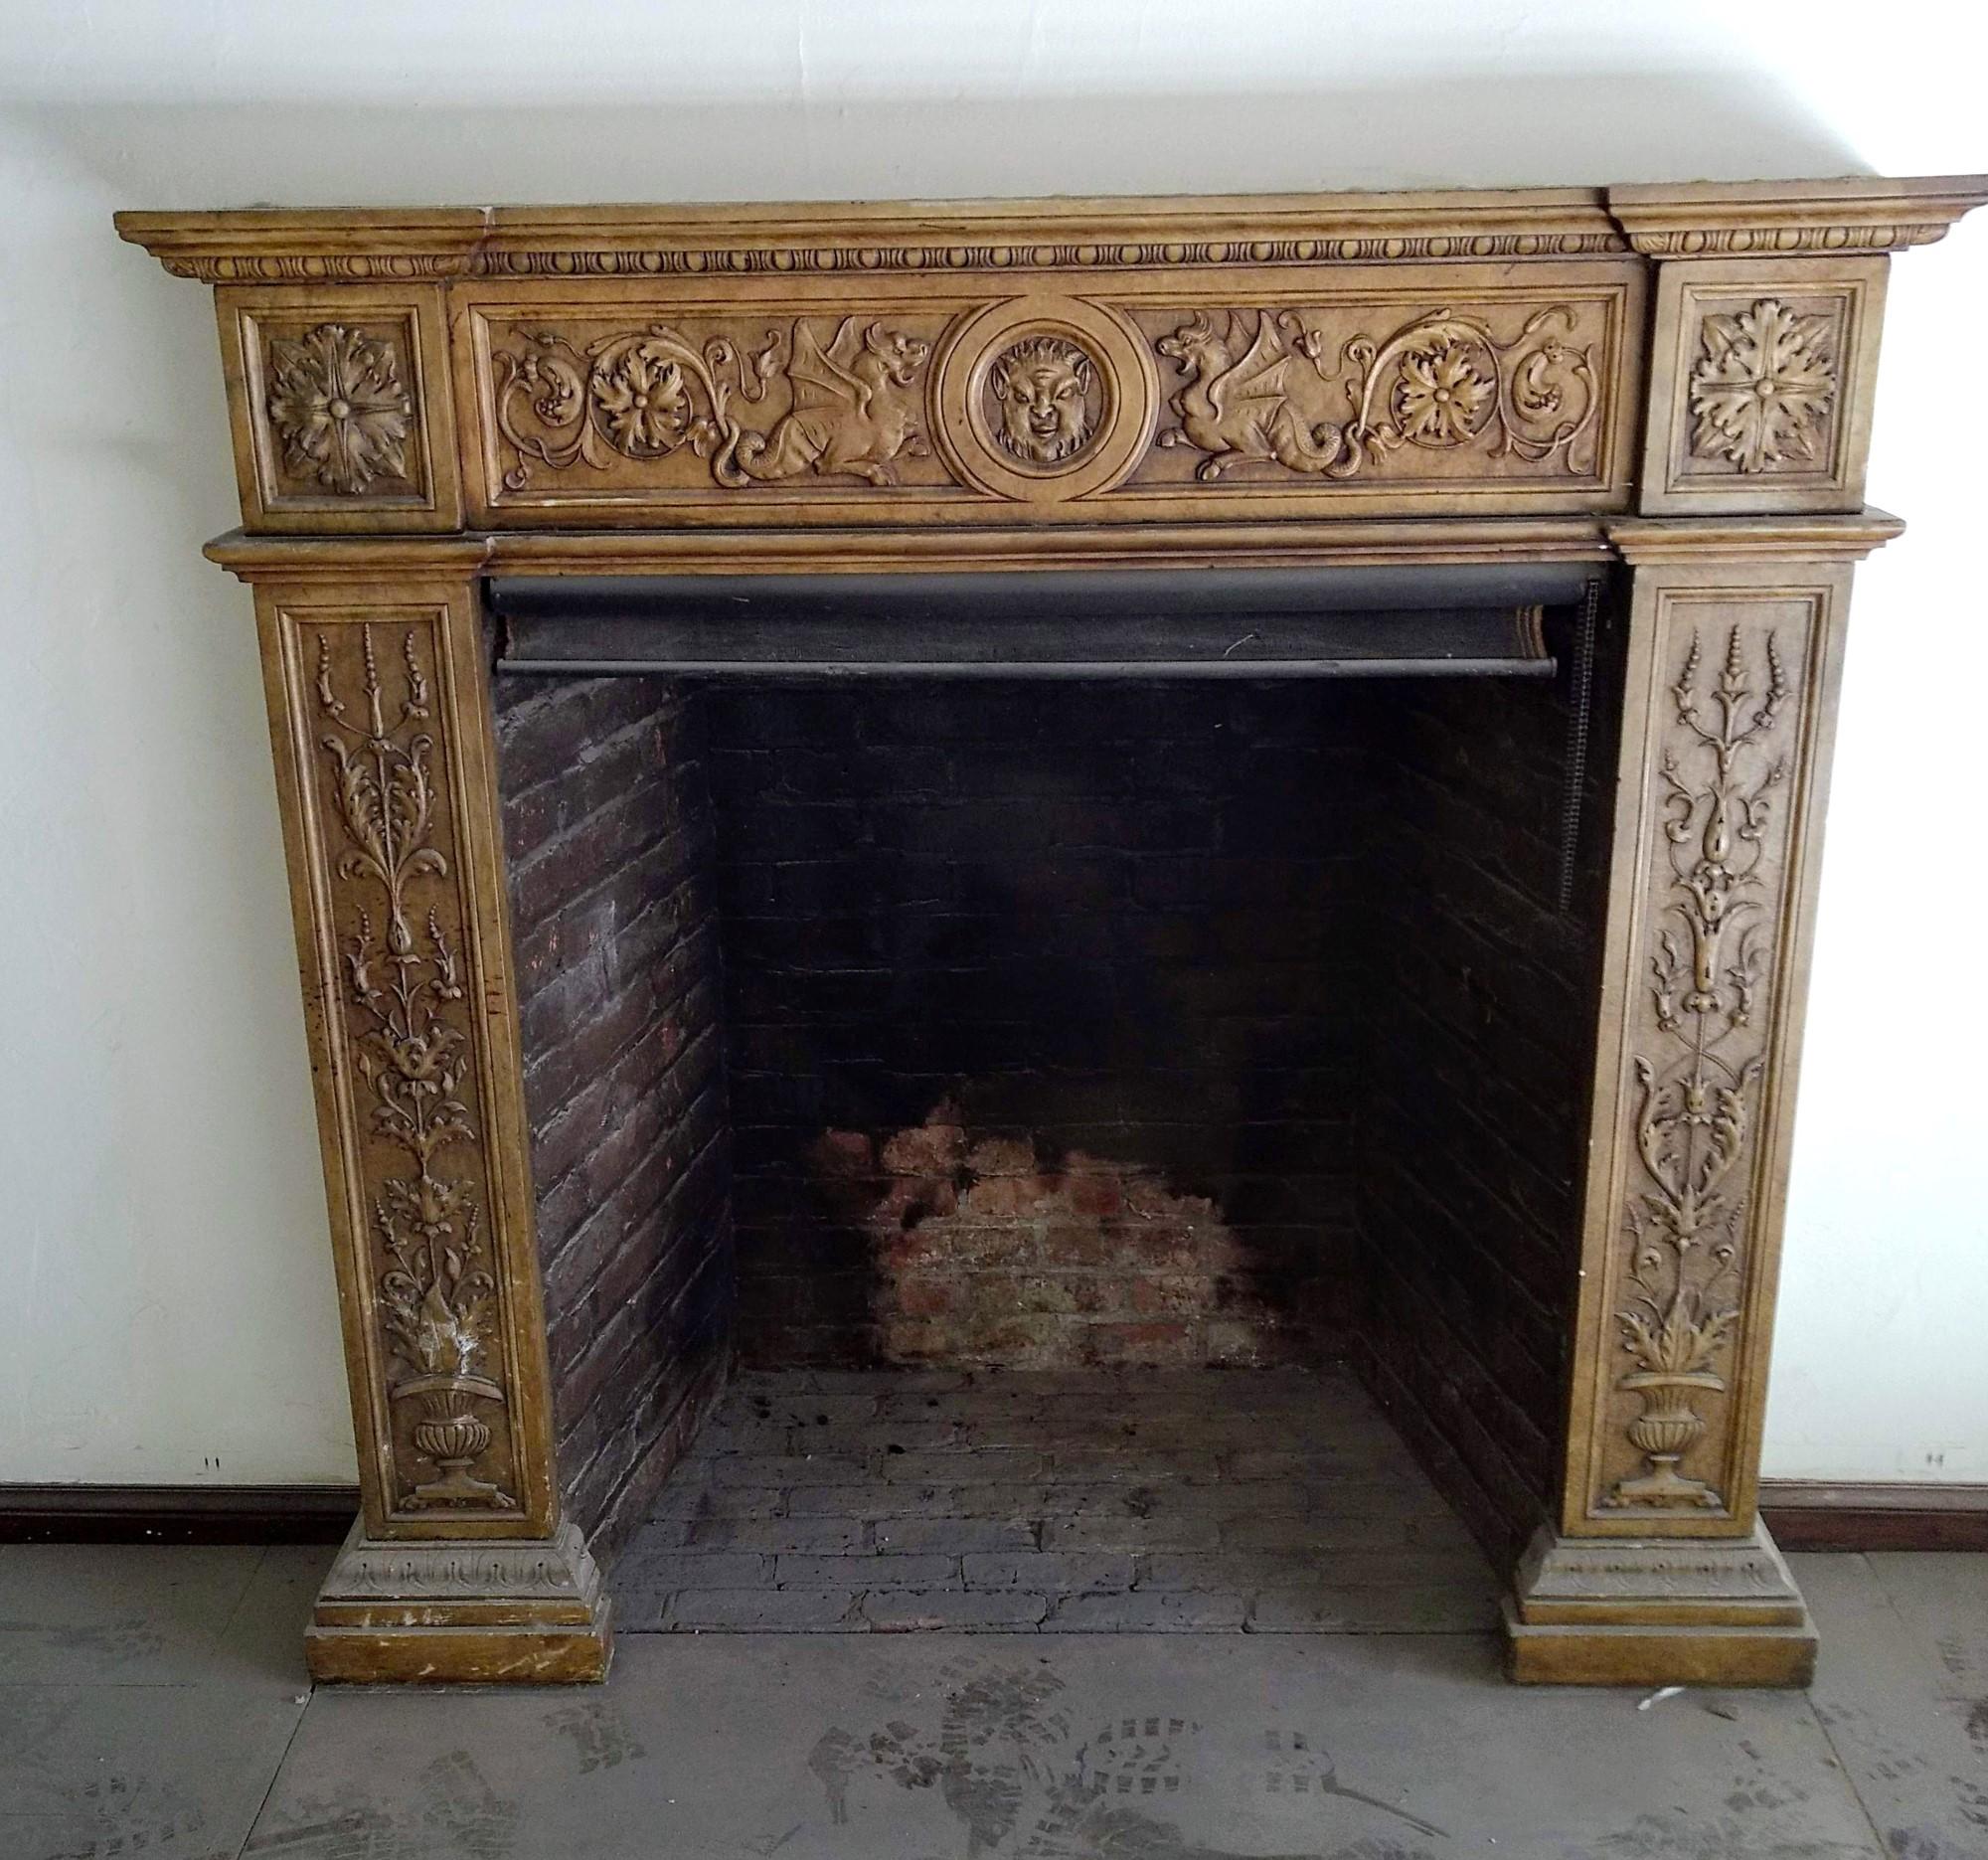 1880s fireplace